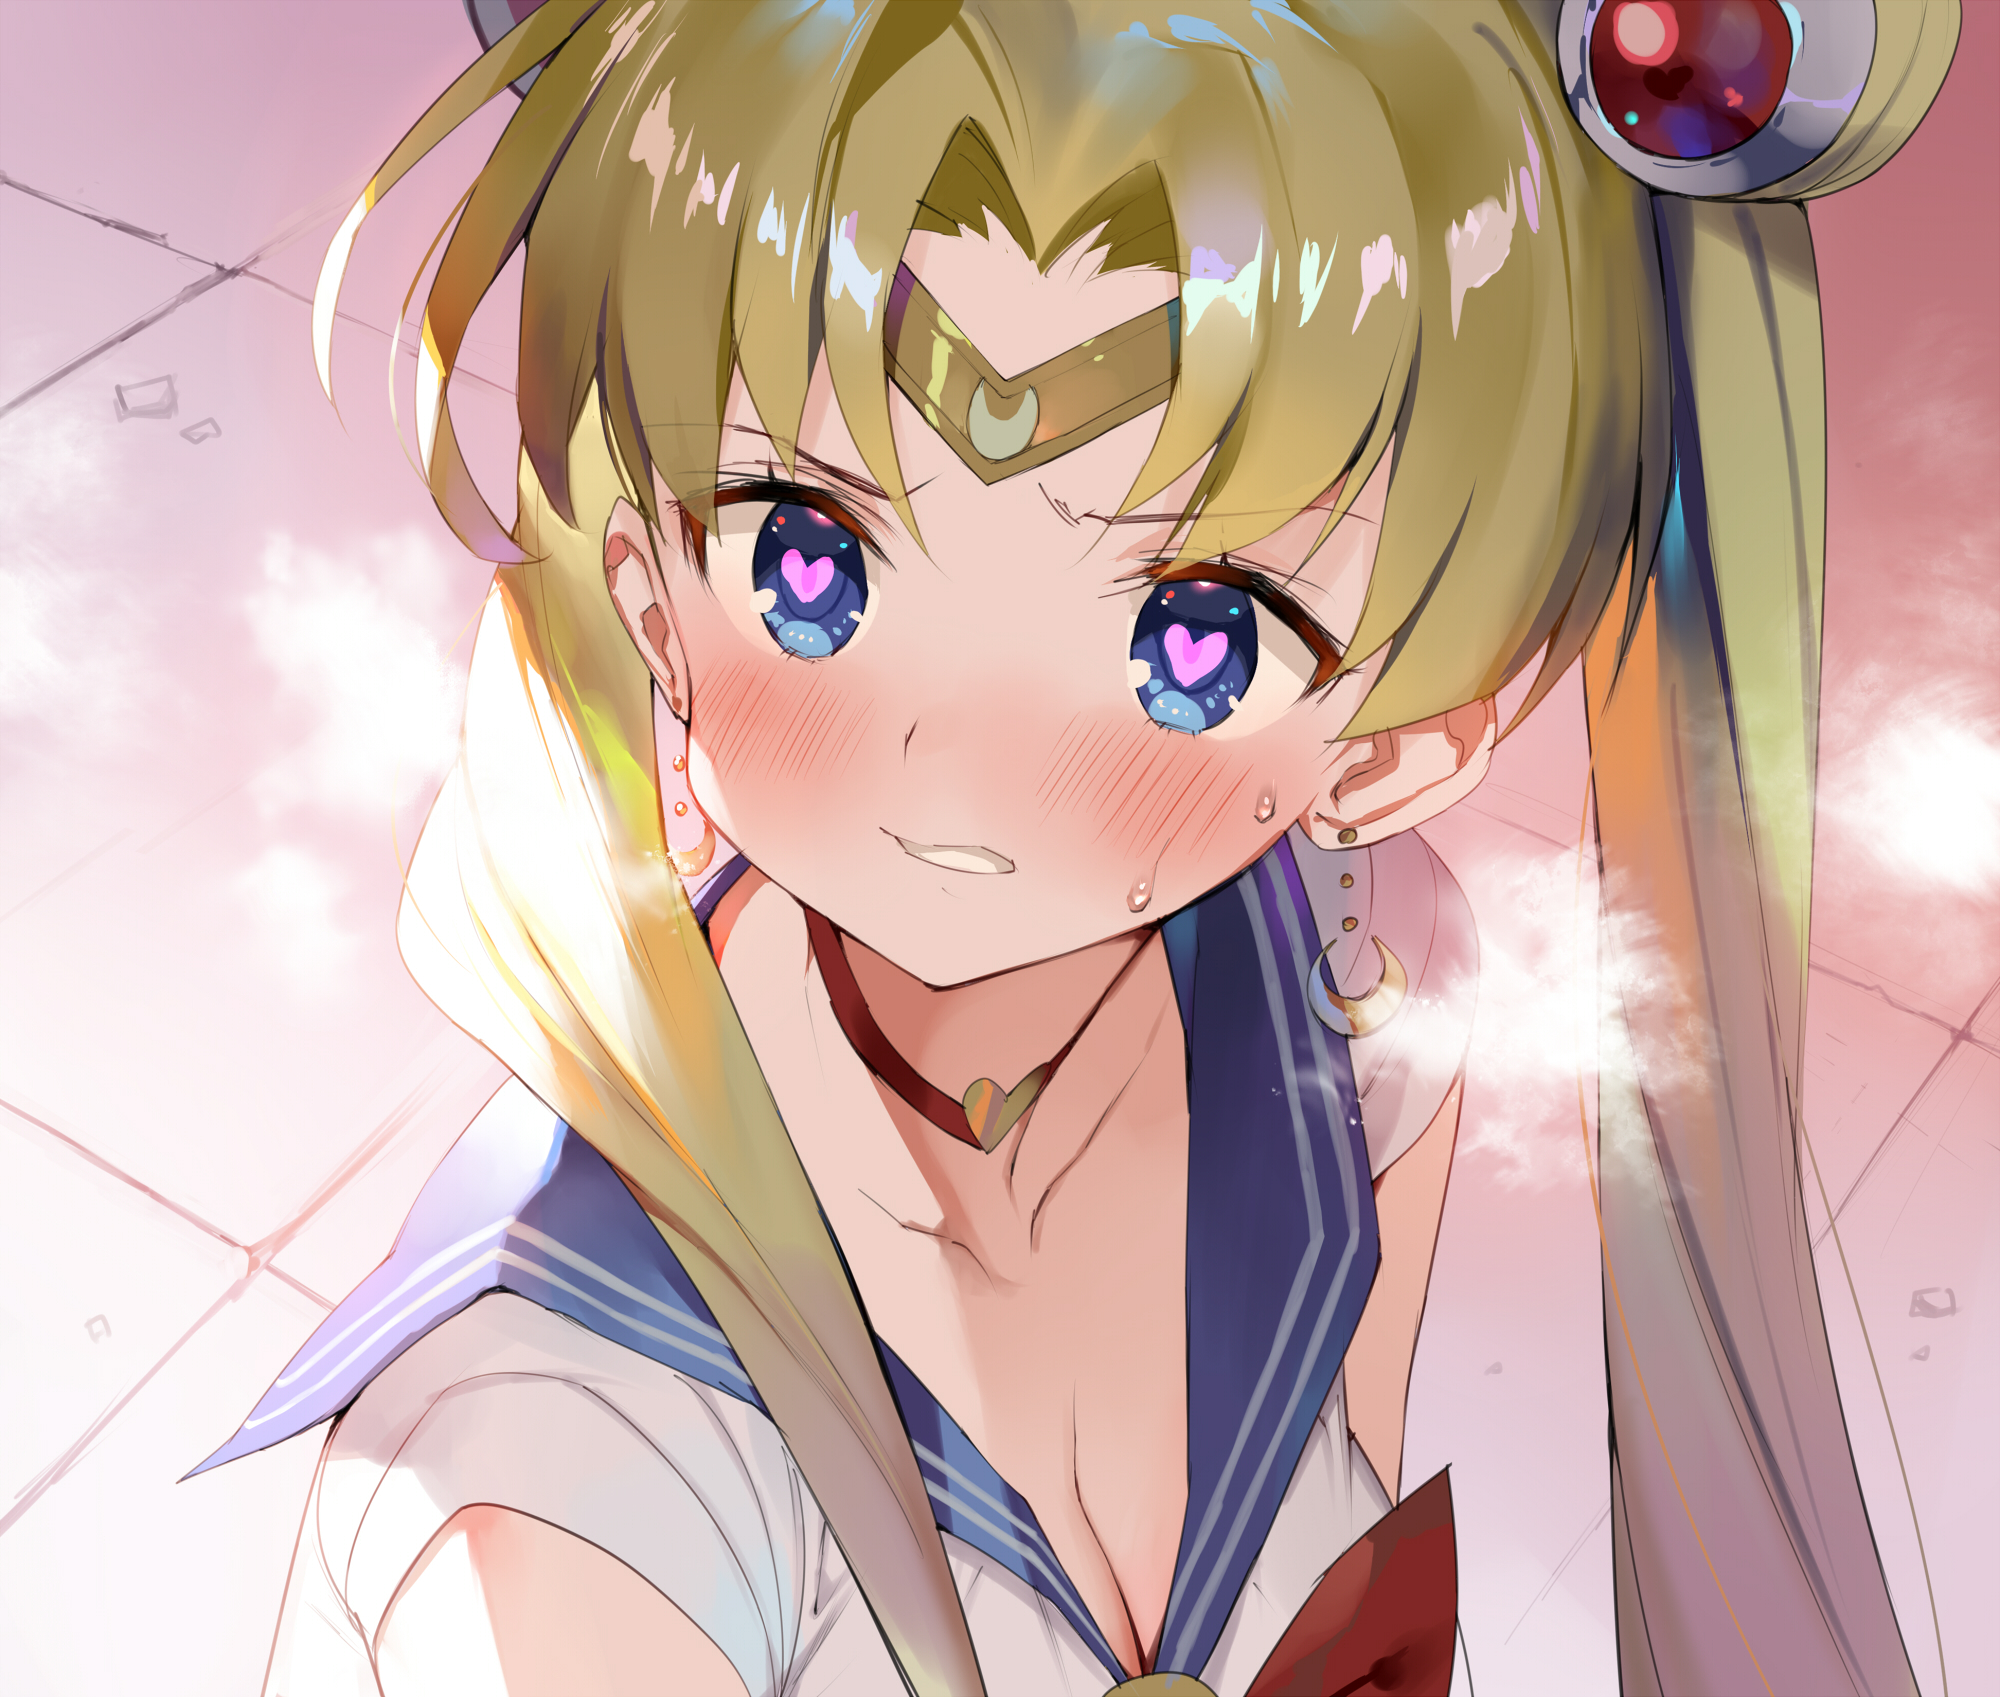 Anime 2000x1697 anime anime girls digital art artwork 2D portrait Sailor Moon Tsukino Usagi Gaou blonde twintails blushing blue eyes heart eyes cleavage Sailor Moon (Character)